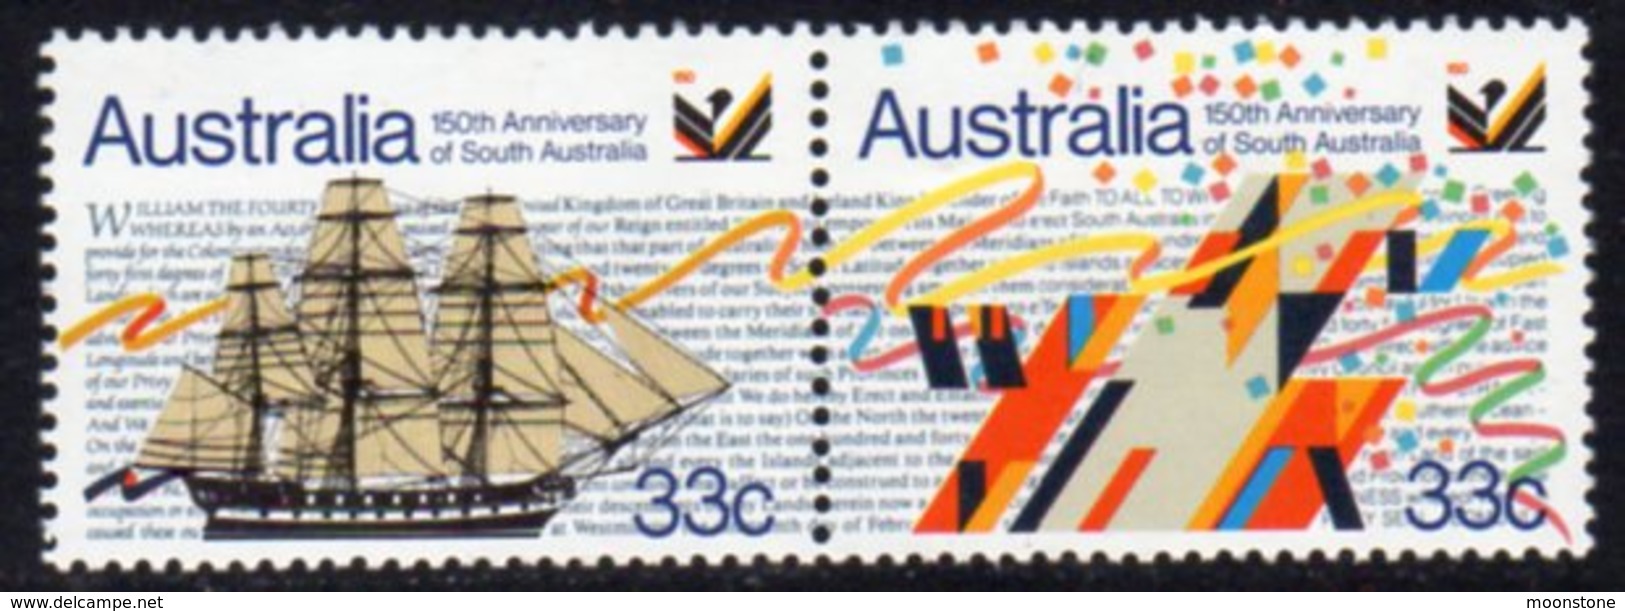 Australia 1986 150th Anniversary Of South Australia Se-tenant Pair, MNH, SG 1000/1 - Mint Stamps